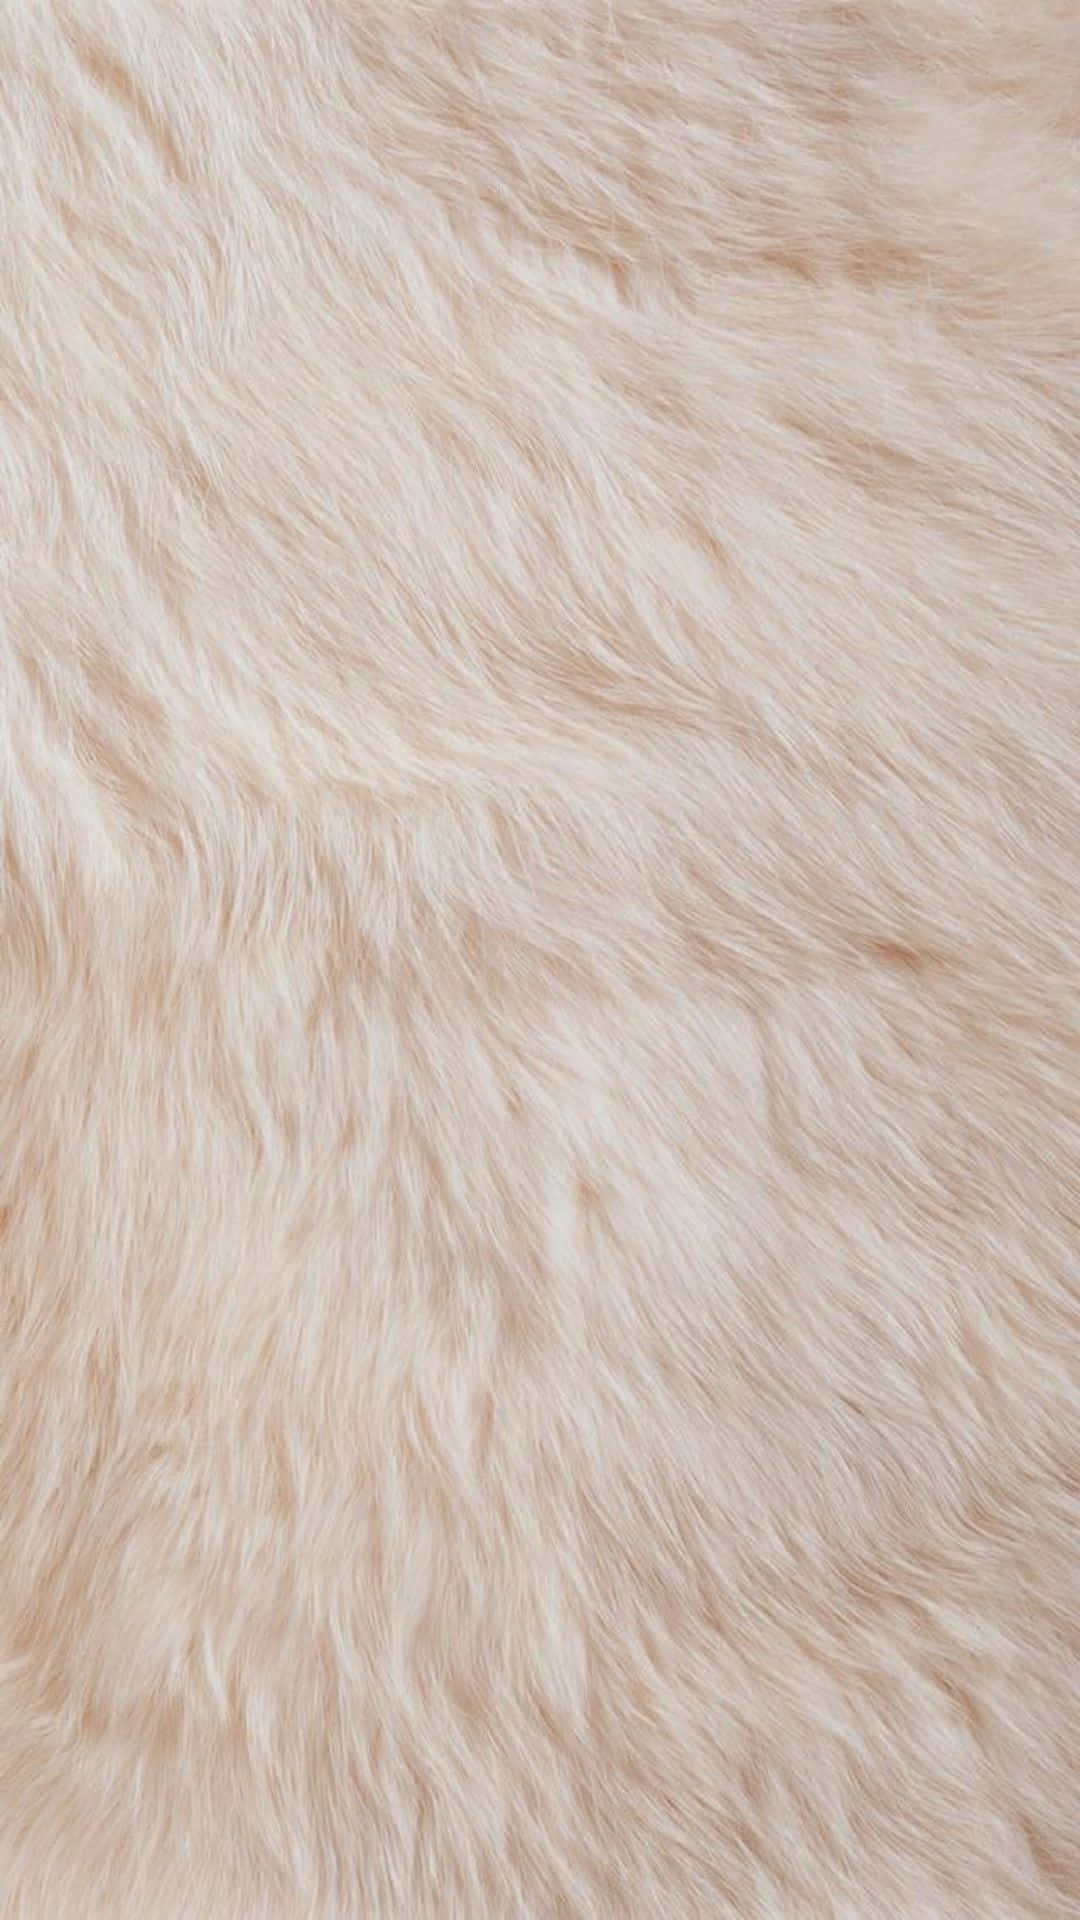 Caption: Luxurious Fur Texture Background